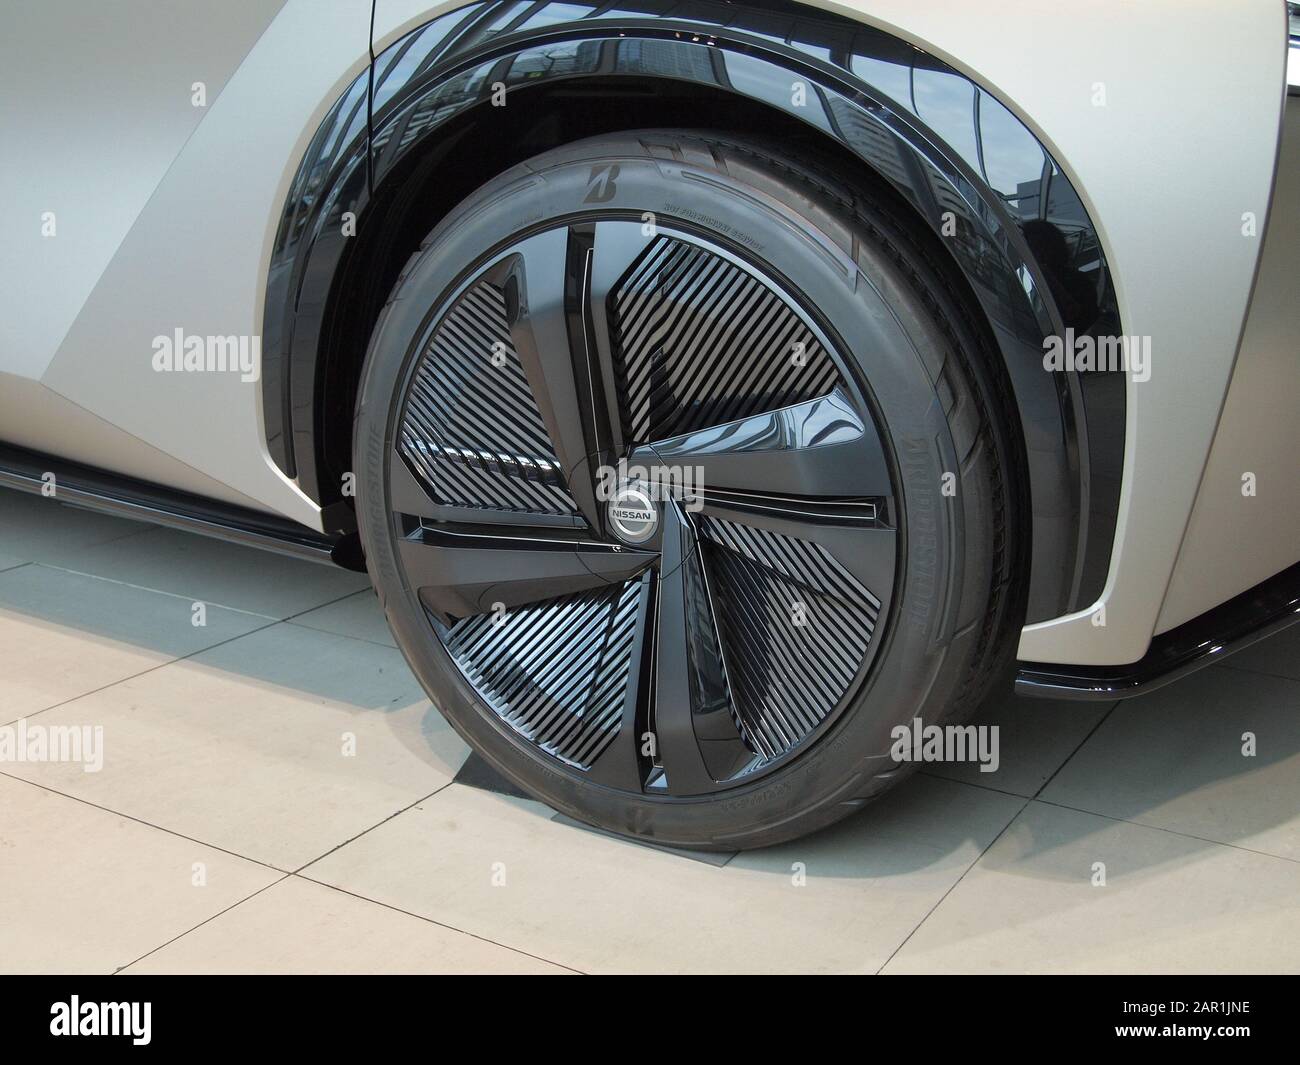 Nissan IMx Kuro concept car Stock Photo